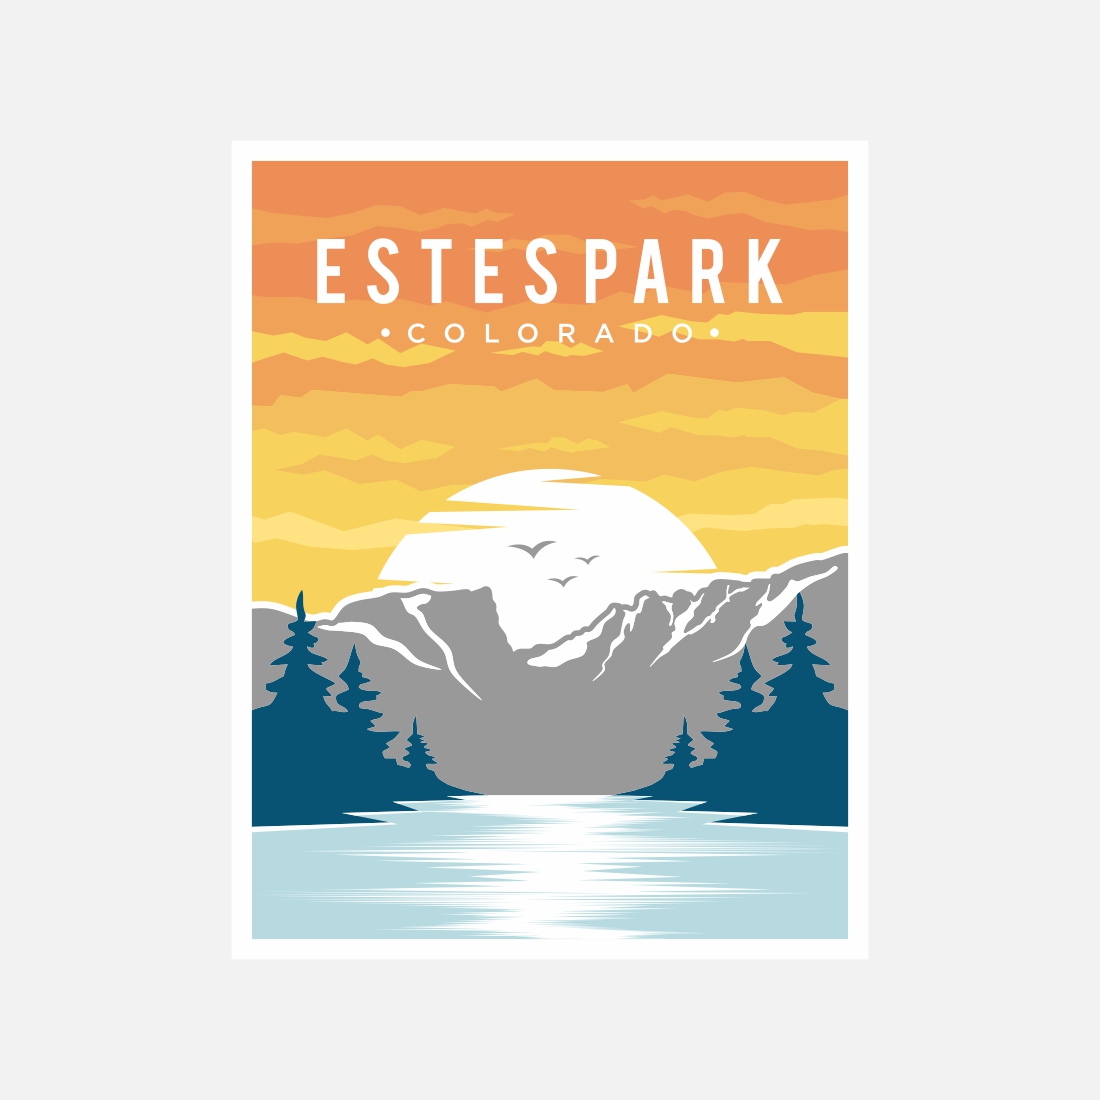 Estes Park poster vector illustration design – Only $7 preview image.